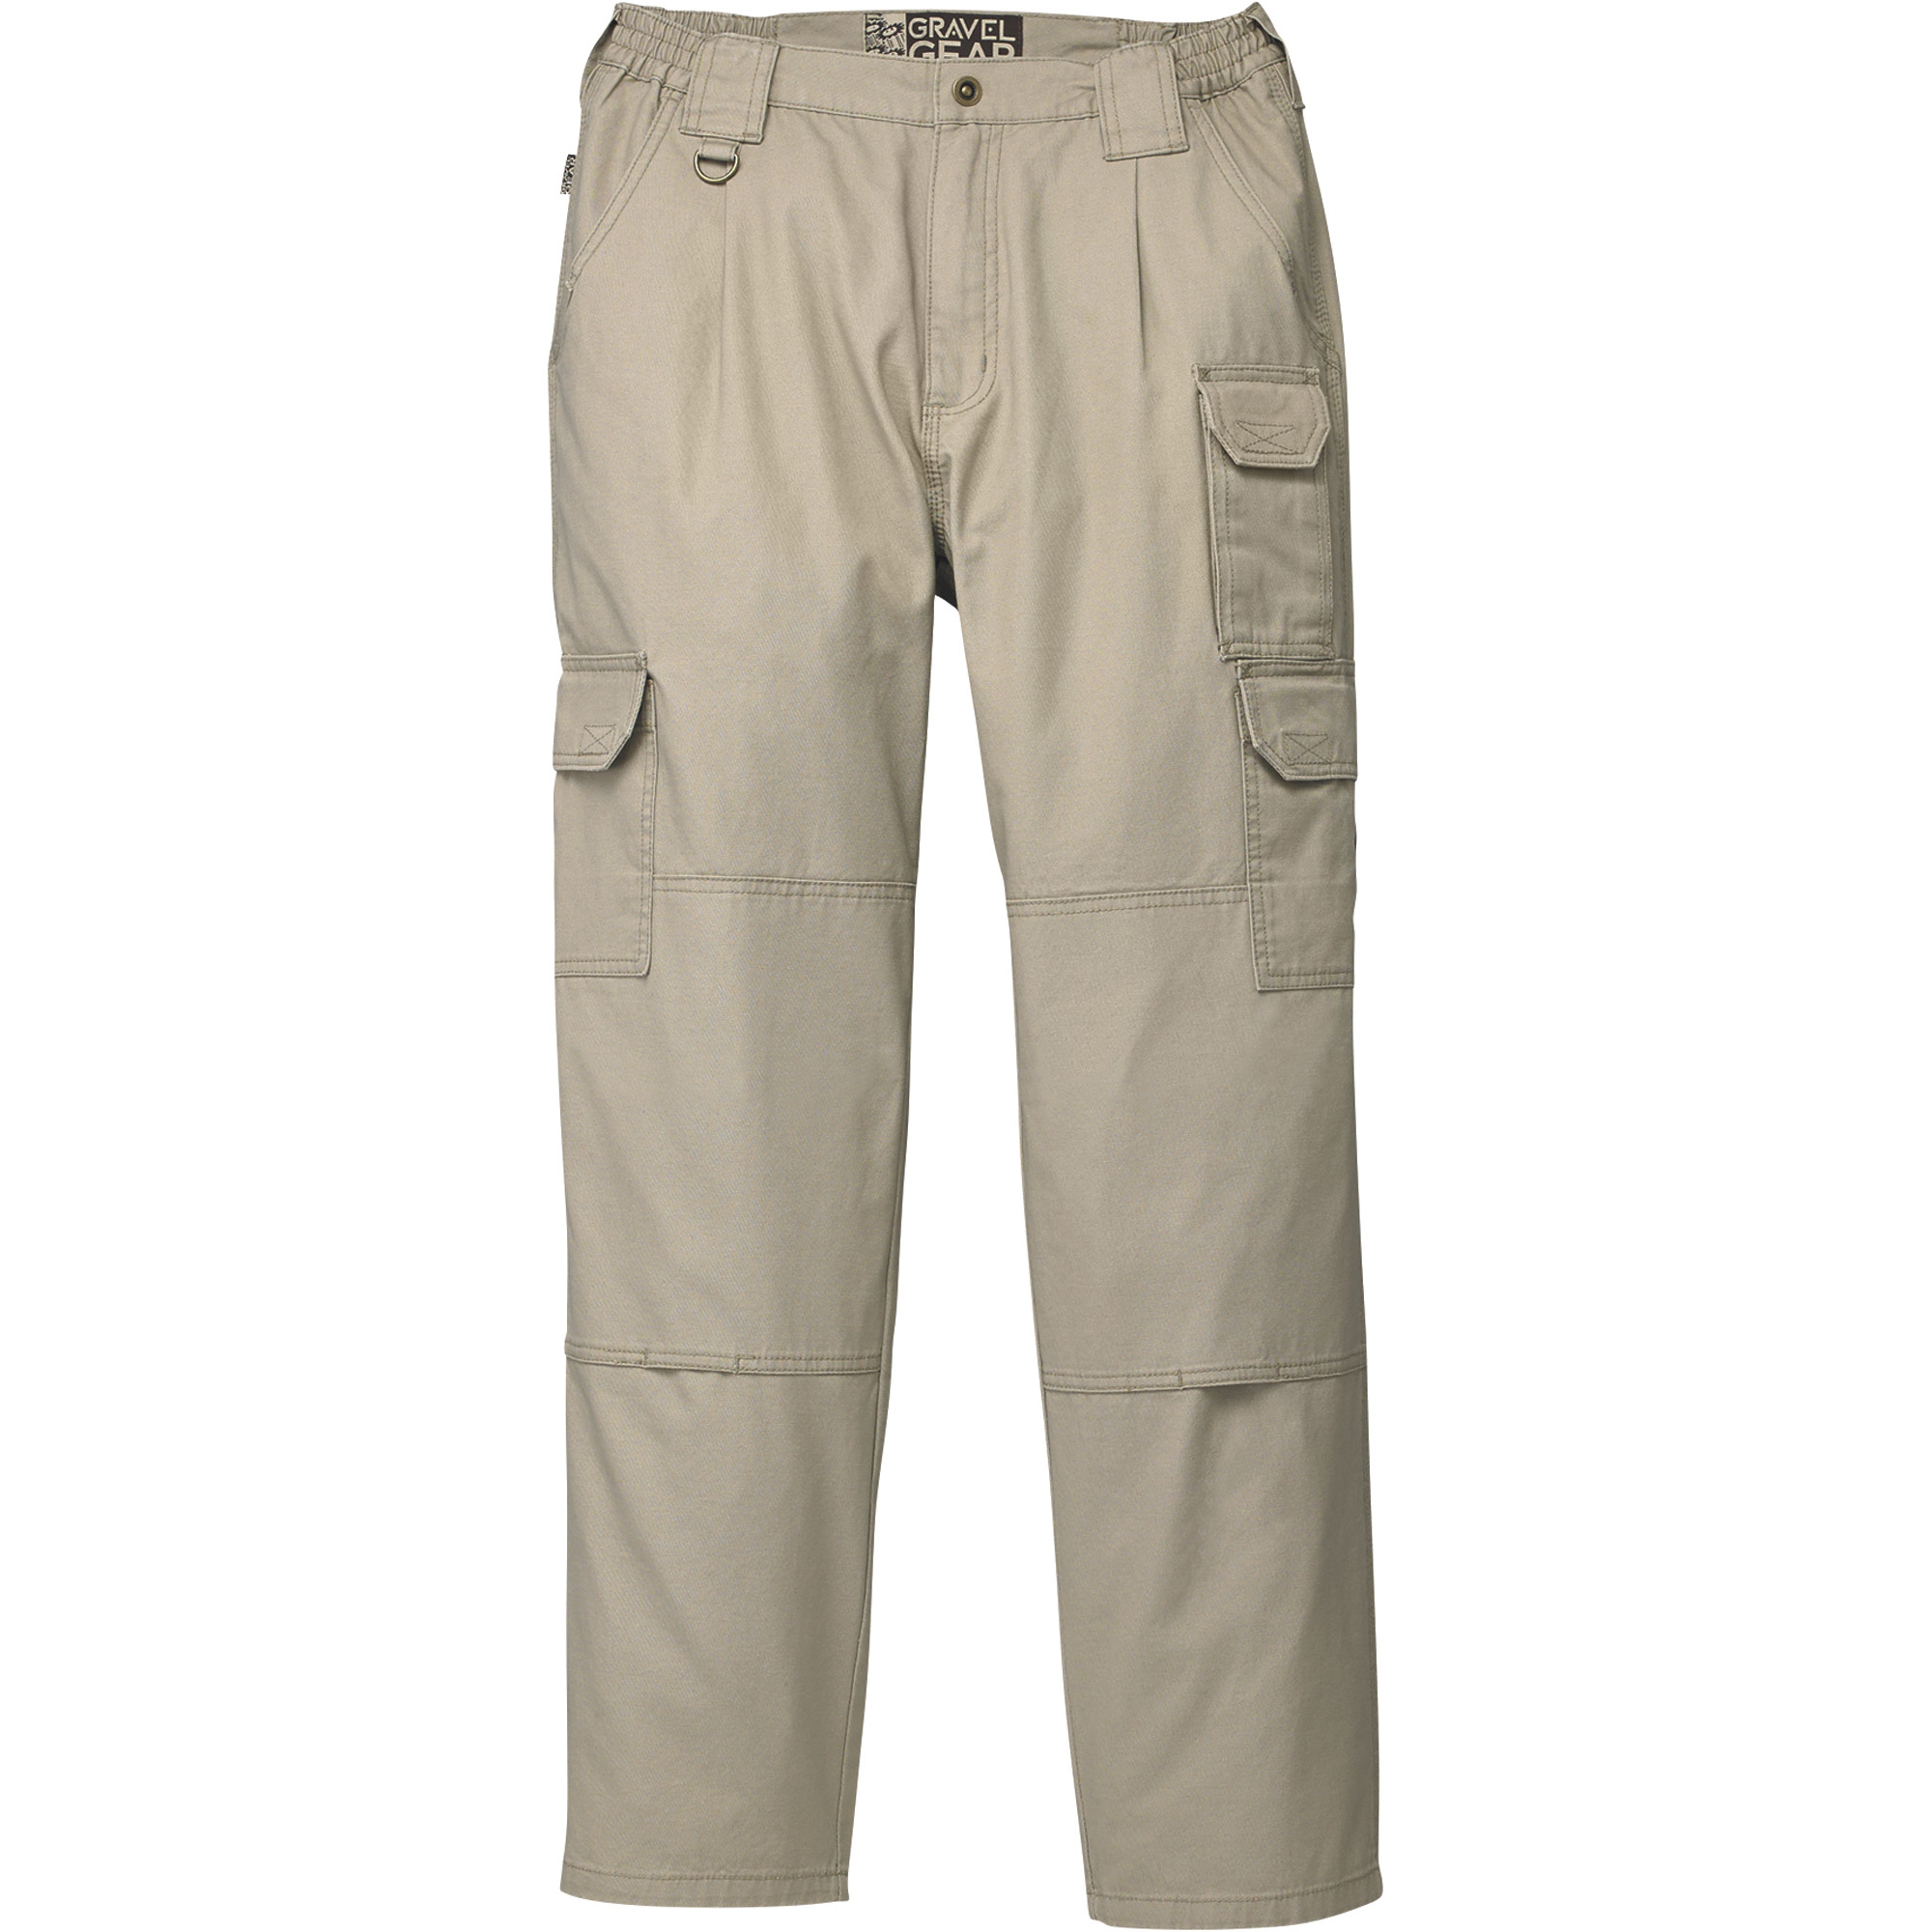 Gravel Gear Men's 7-Pocket Tactical Pants with Teflon - Khaki, 36Inch Waist x 32Inch Inseam